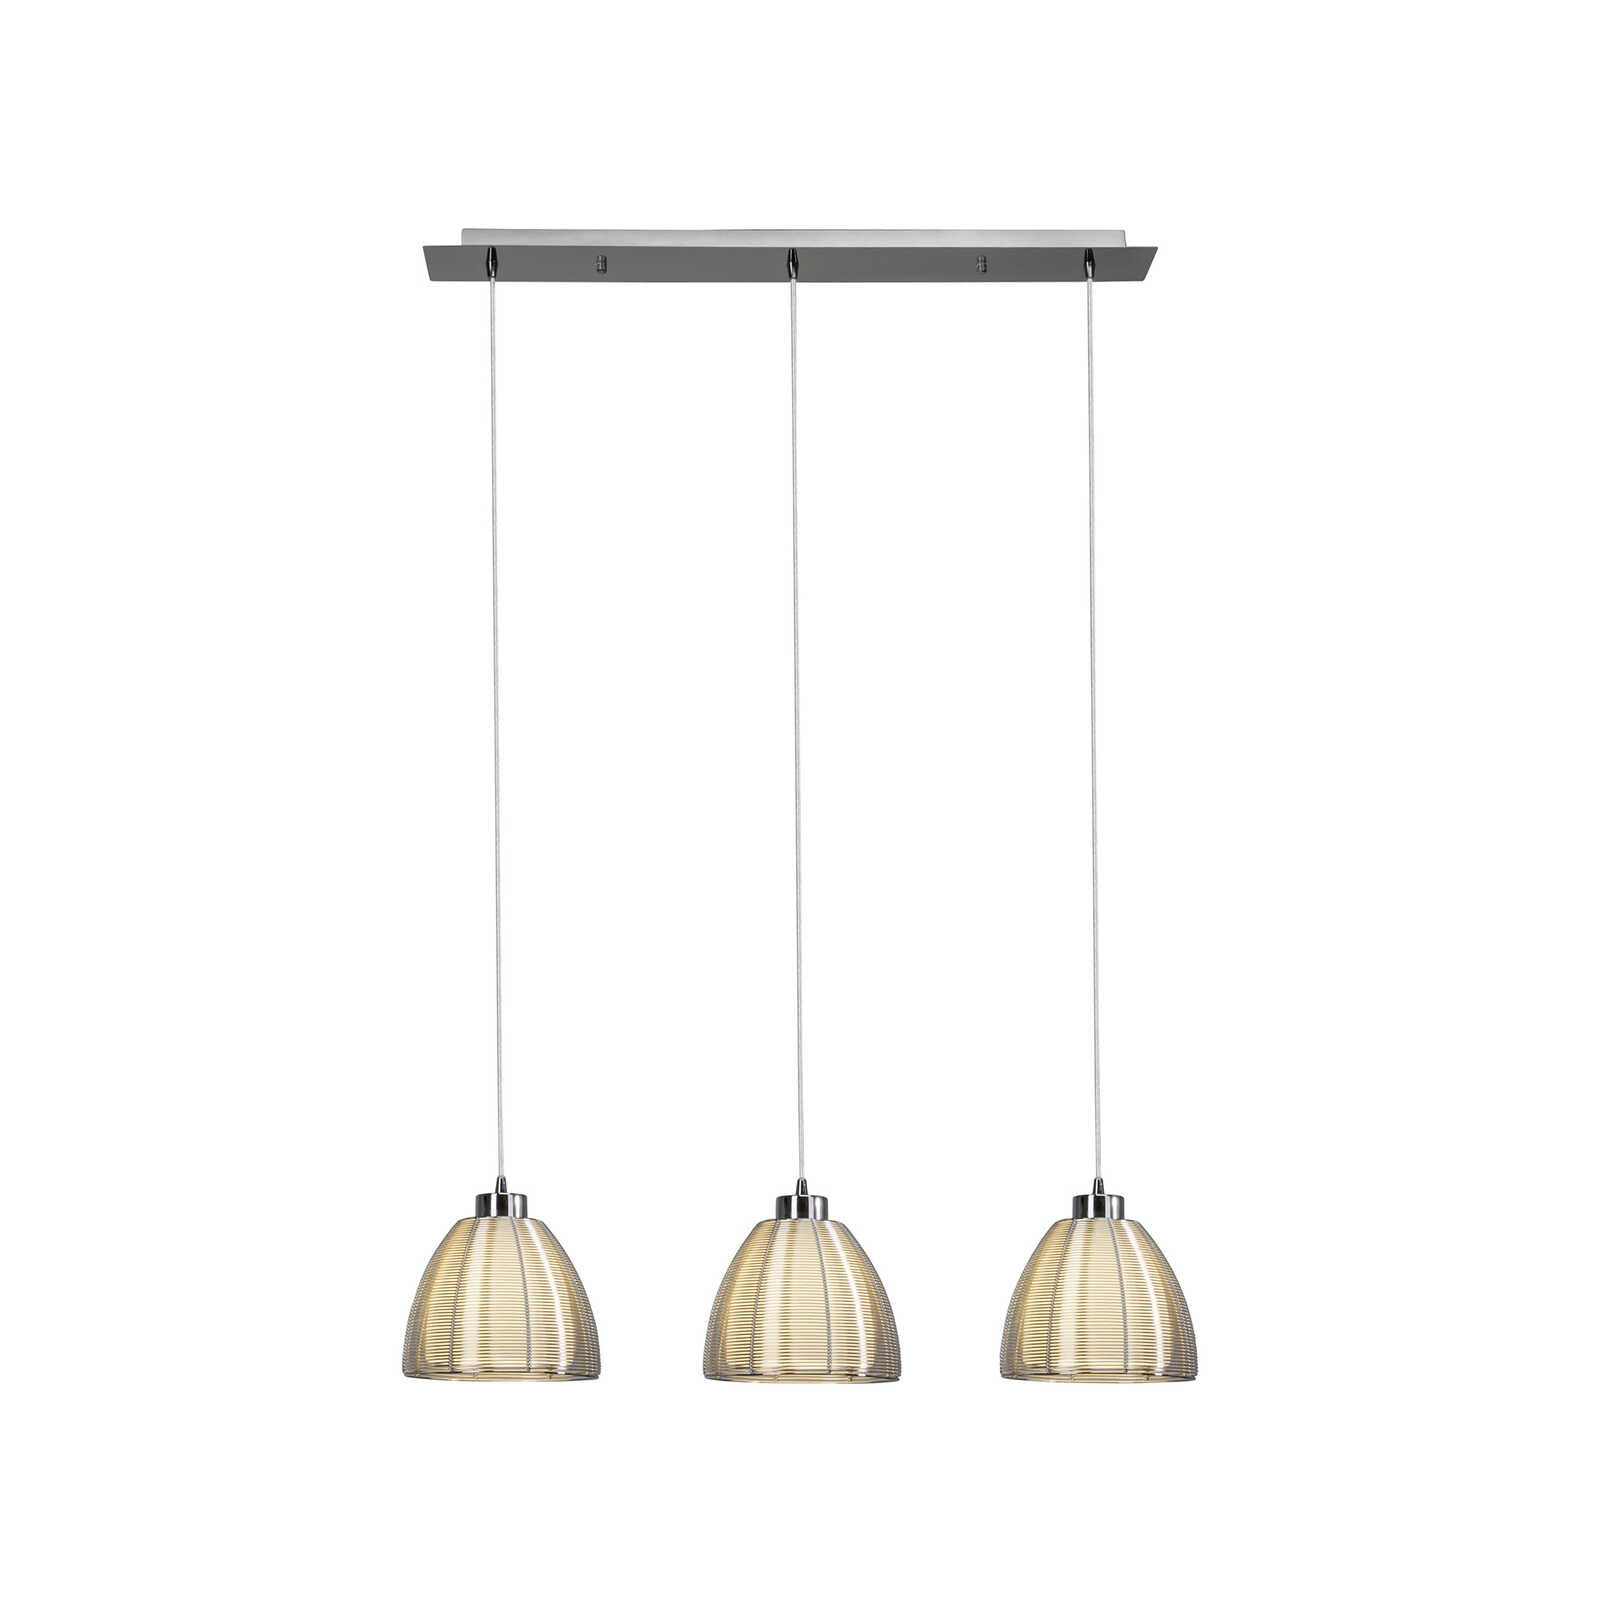 Glazen hanglamp - Maxime 7 - Metallic
